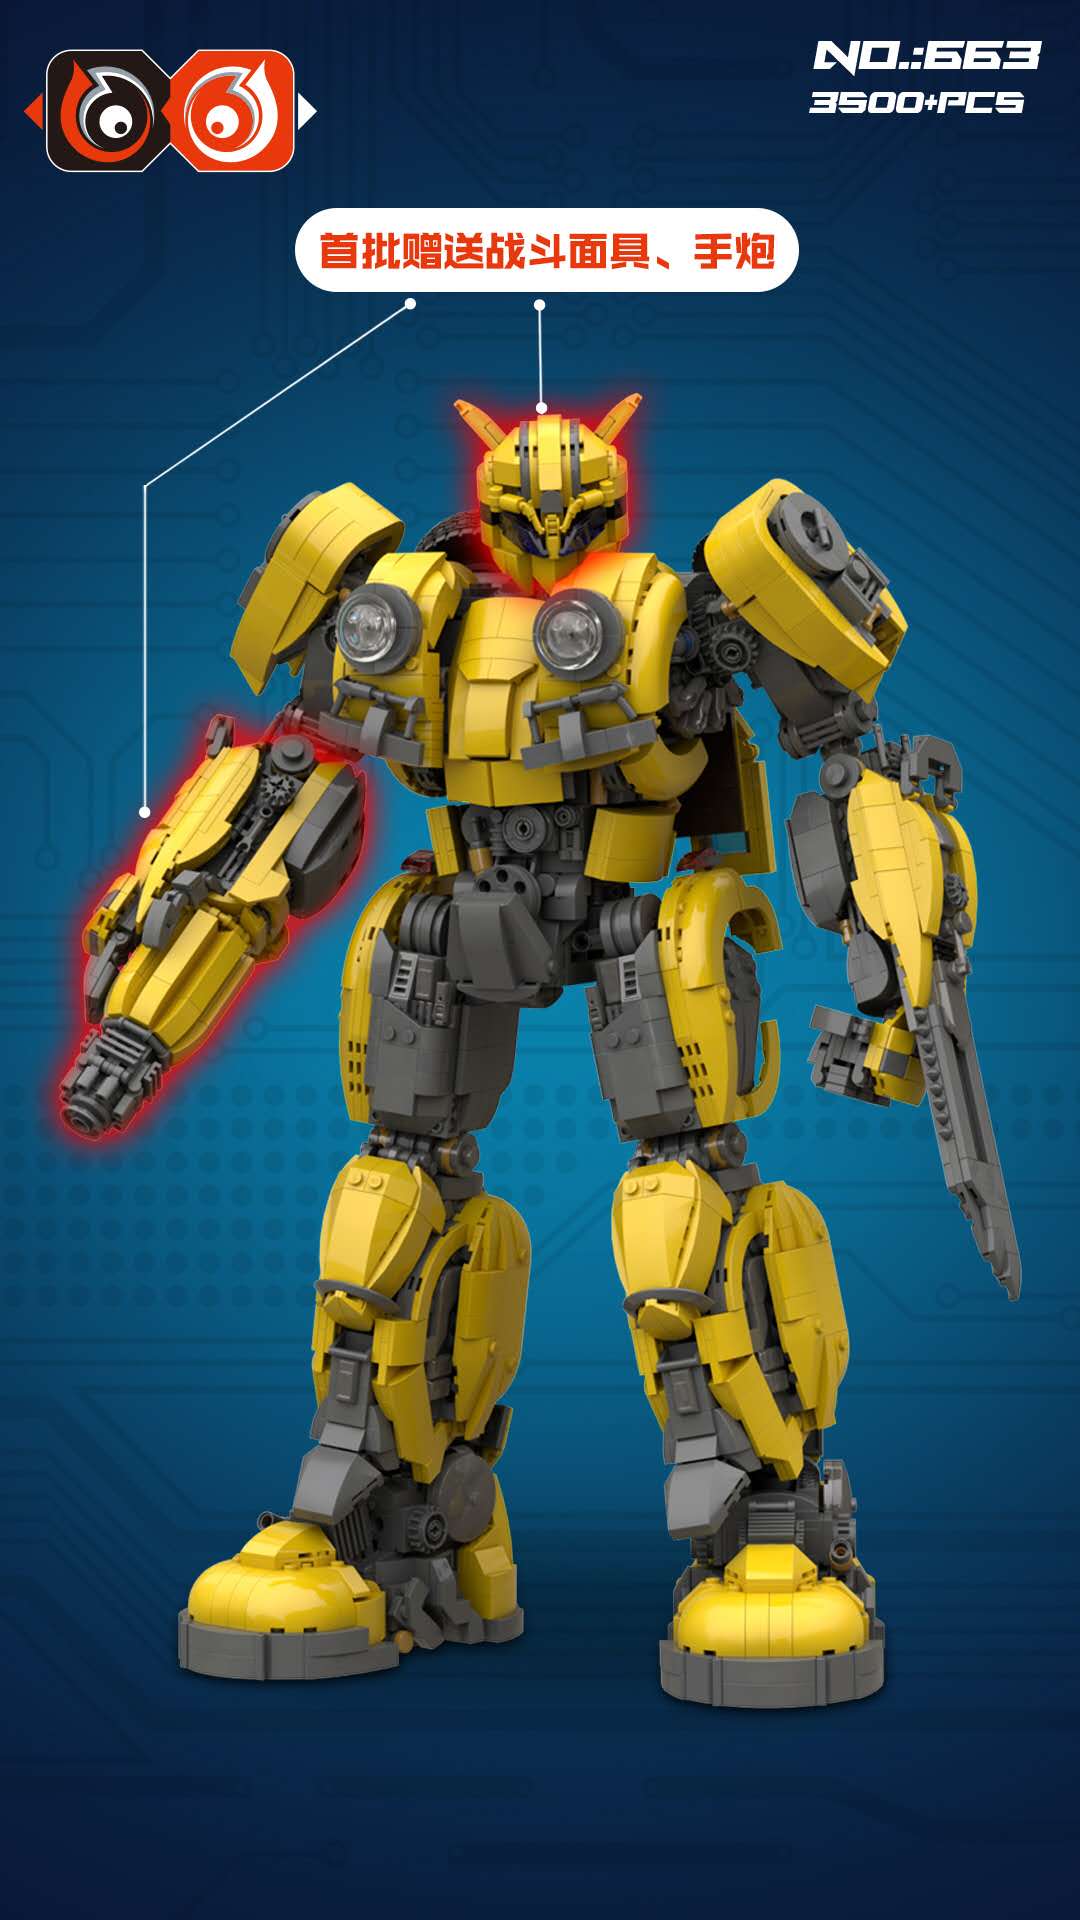 66 663 bumblebee verion 2018 transformer robot 6870 - MOULD KING